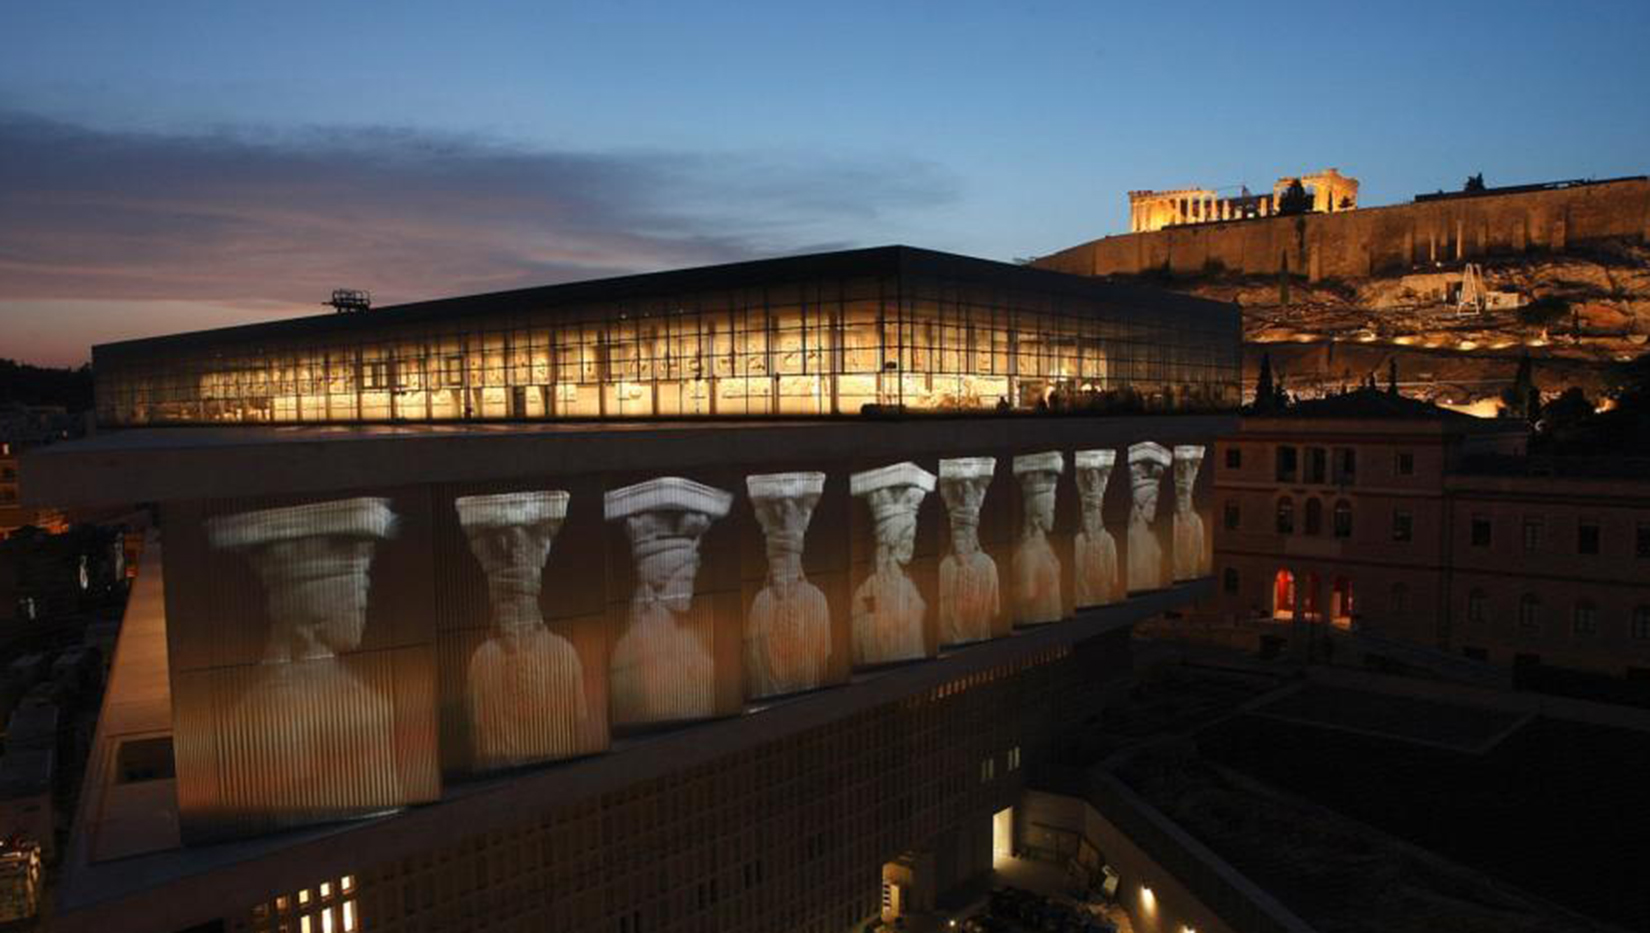 Tο Μουσείο Ακρόπολης γιορτάζει τα 8 χρόνια λειτουργίας του -Δείτε το πρόγραμμα